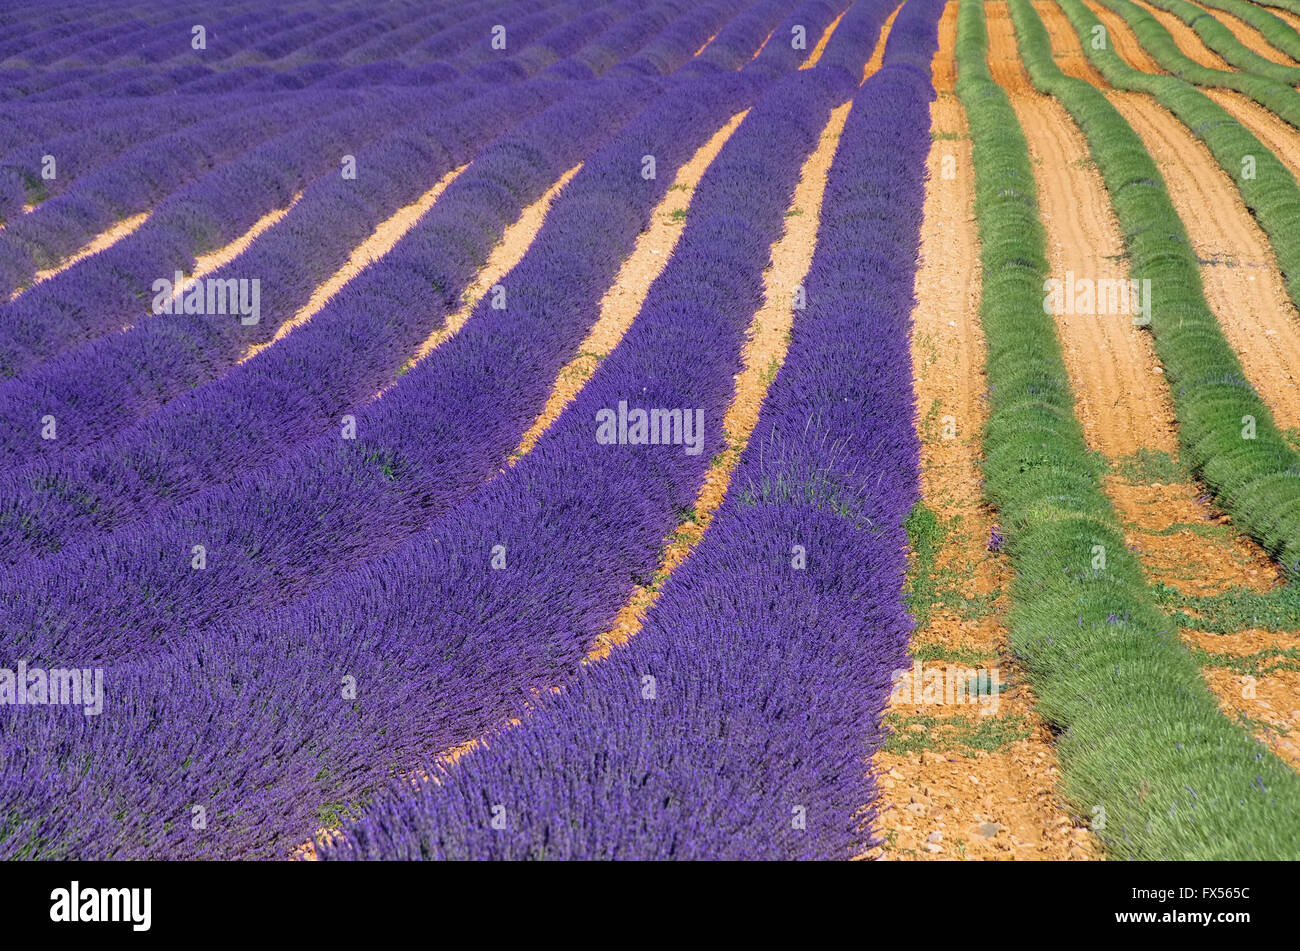 Lavendelfeld Ernte - lavender field harvest 02 Stock Photo